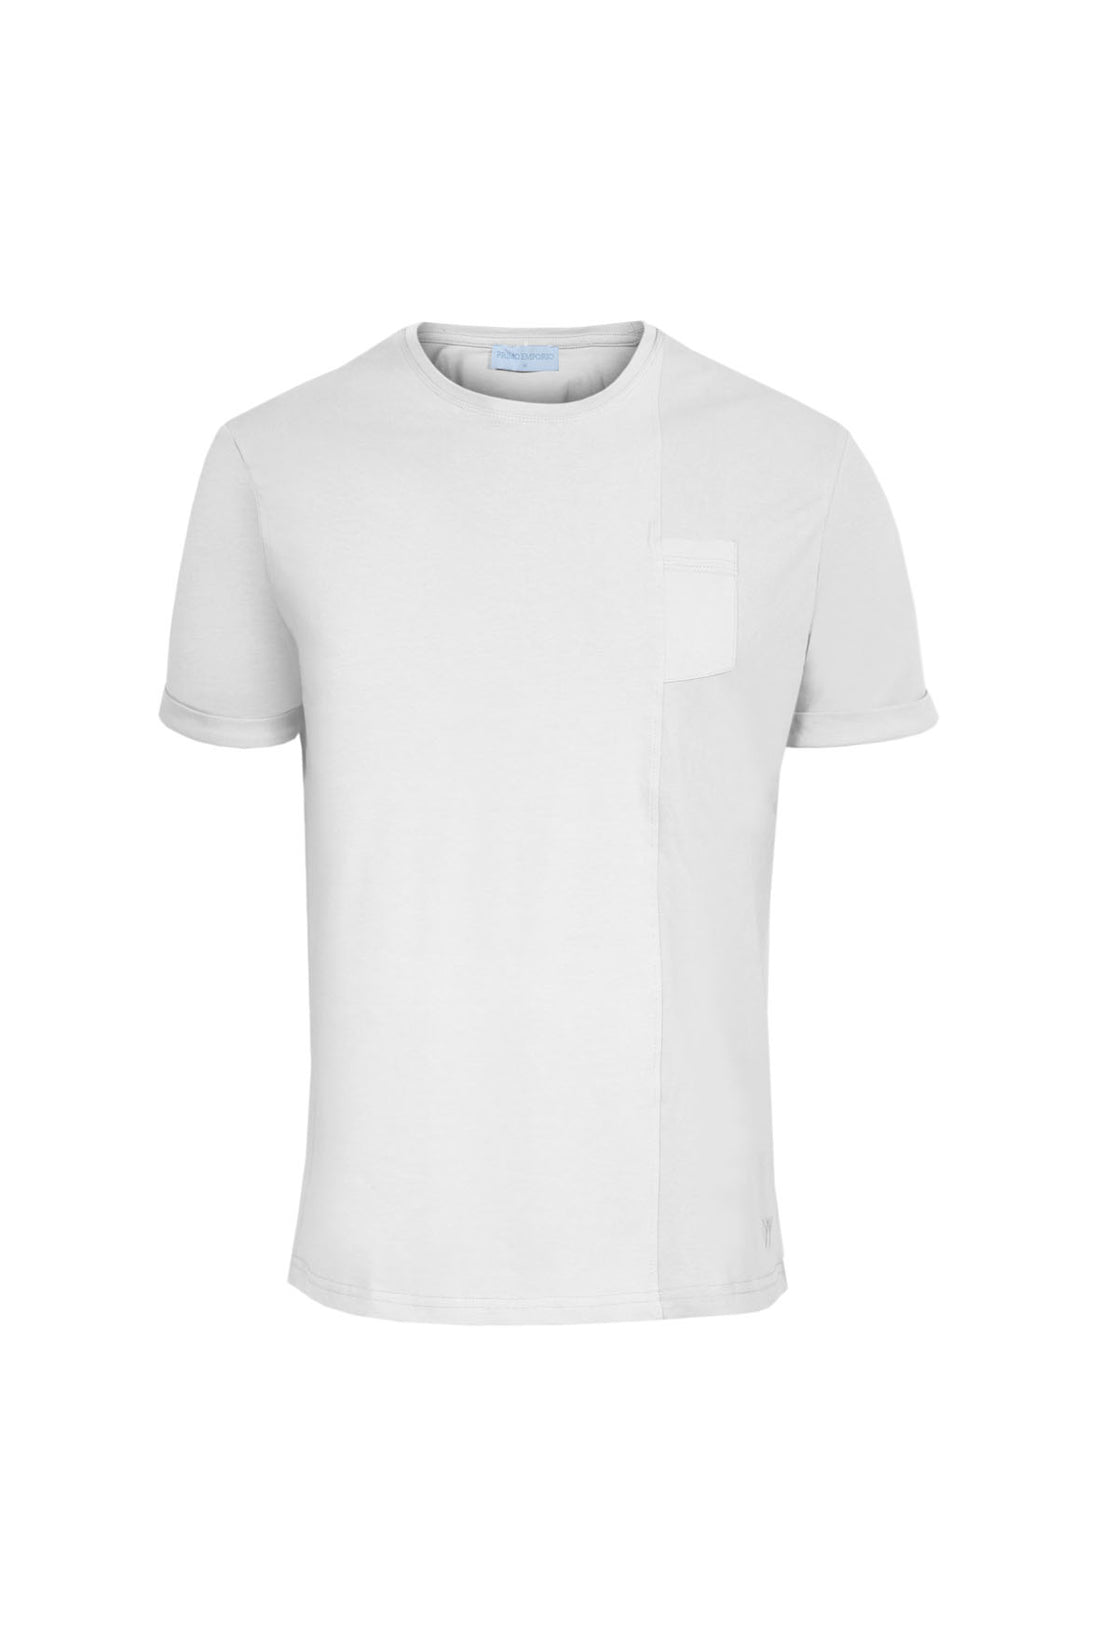 Double Fabric Round Neck T-Shirt - White